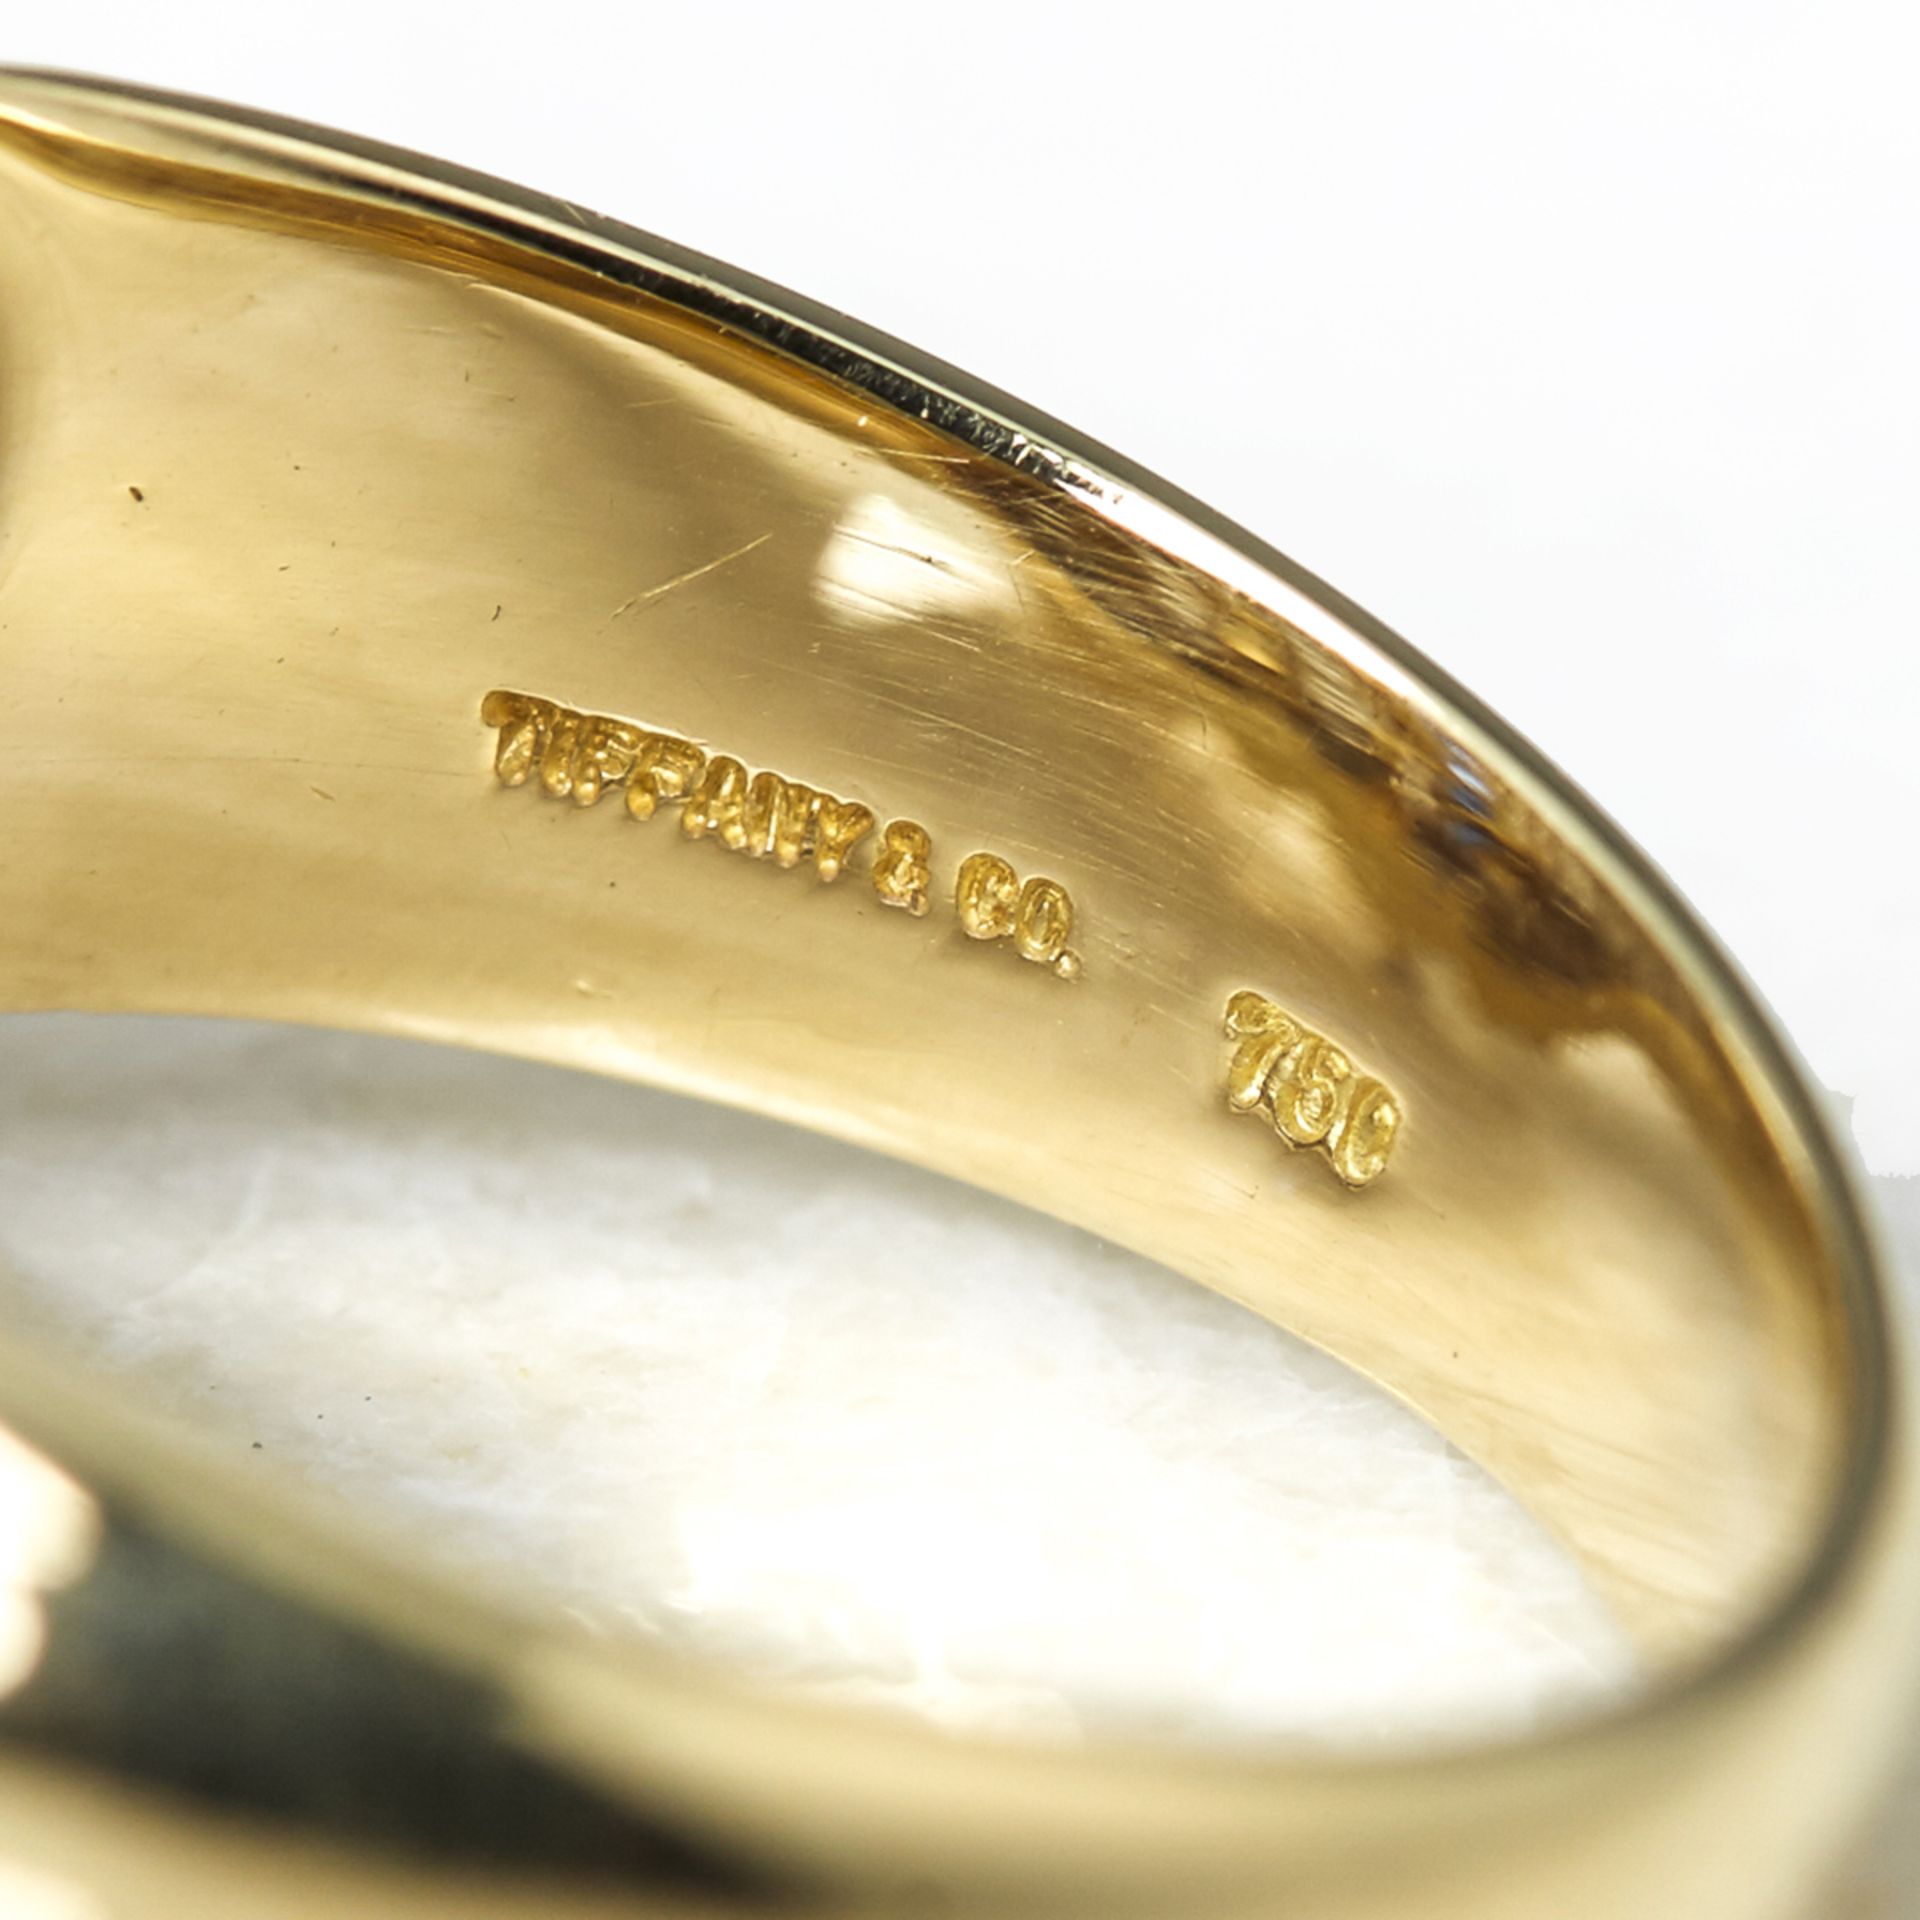 Tiffany & Co. 18k Yellow Gold 0.75ct Sapphire & 1.10ct Diamond Ring - Image 6 of 6